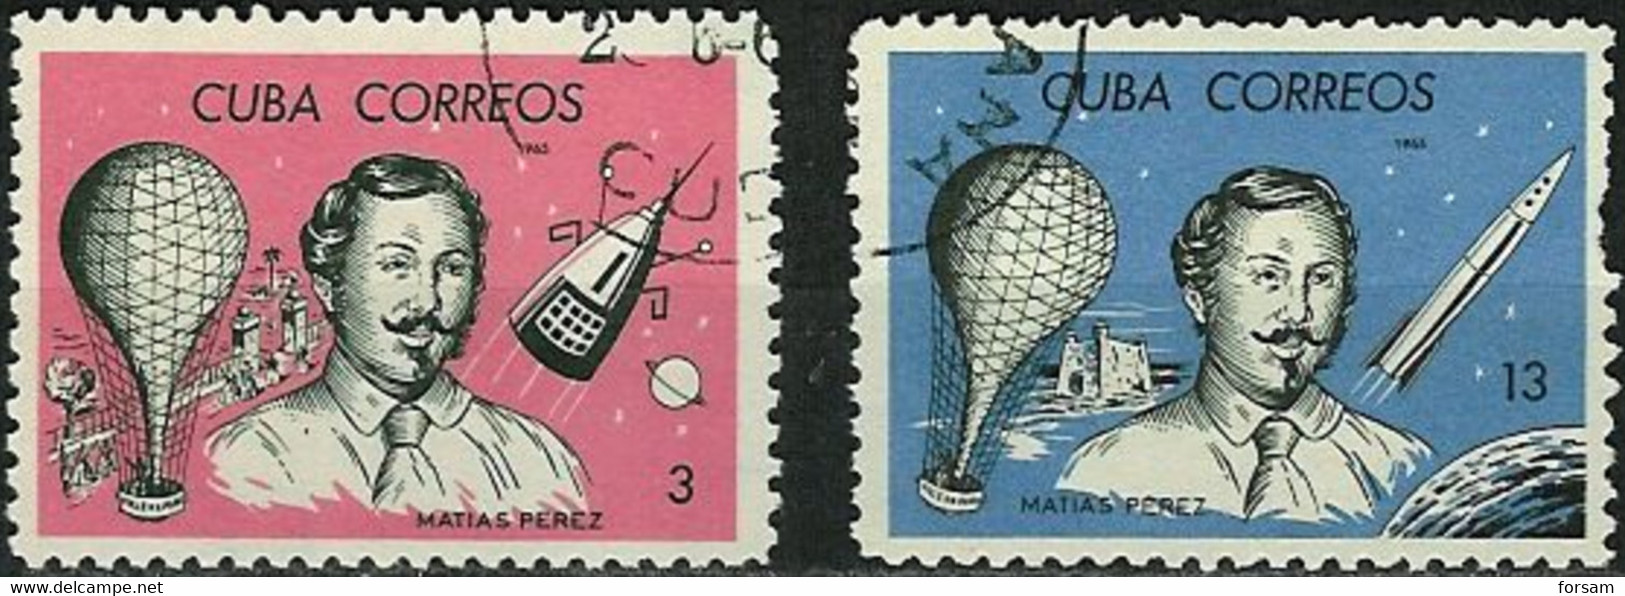 CUBA..1965...Michel # 1033-1034...used...MiCV - 2.20 Euro. - Used Stamps